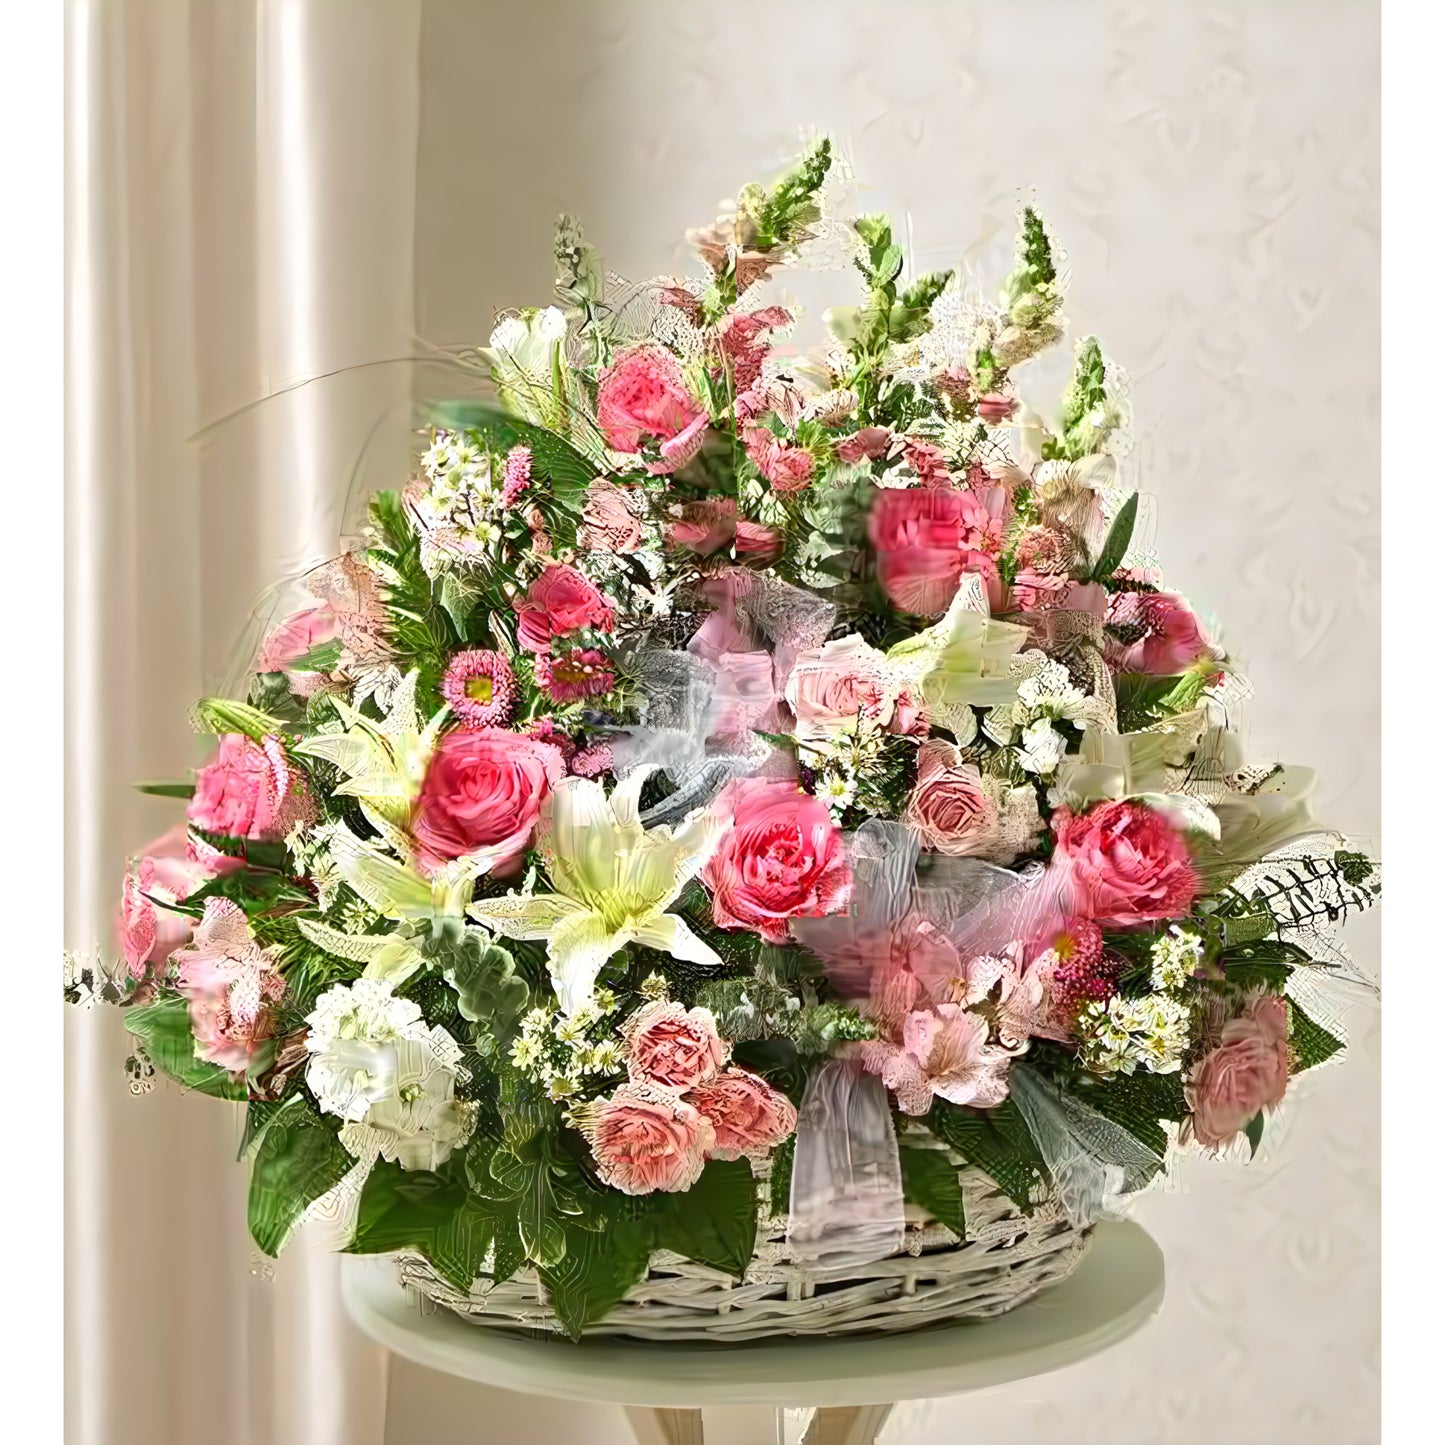 Pink and White Sympathy Arrangement in Basket - Floral Arrangement - Flower Delivery Brooklyn